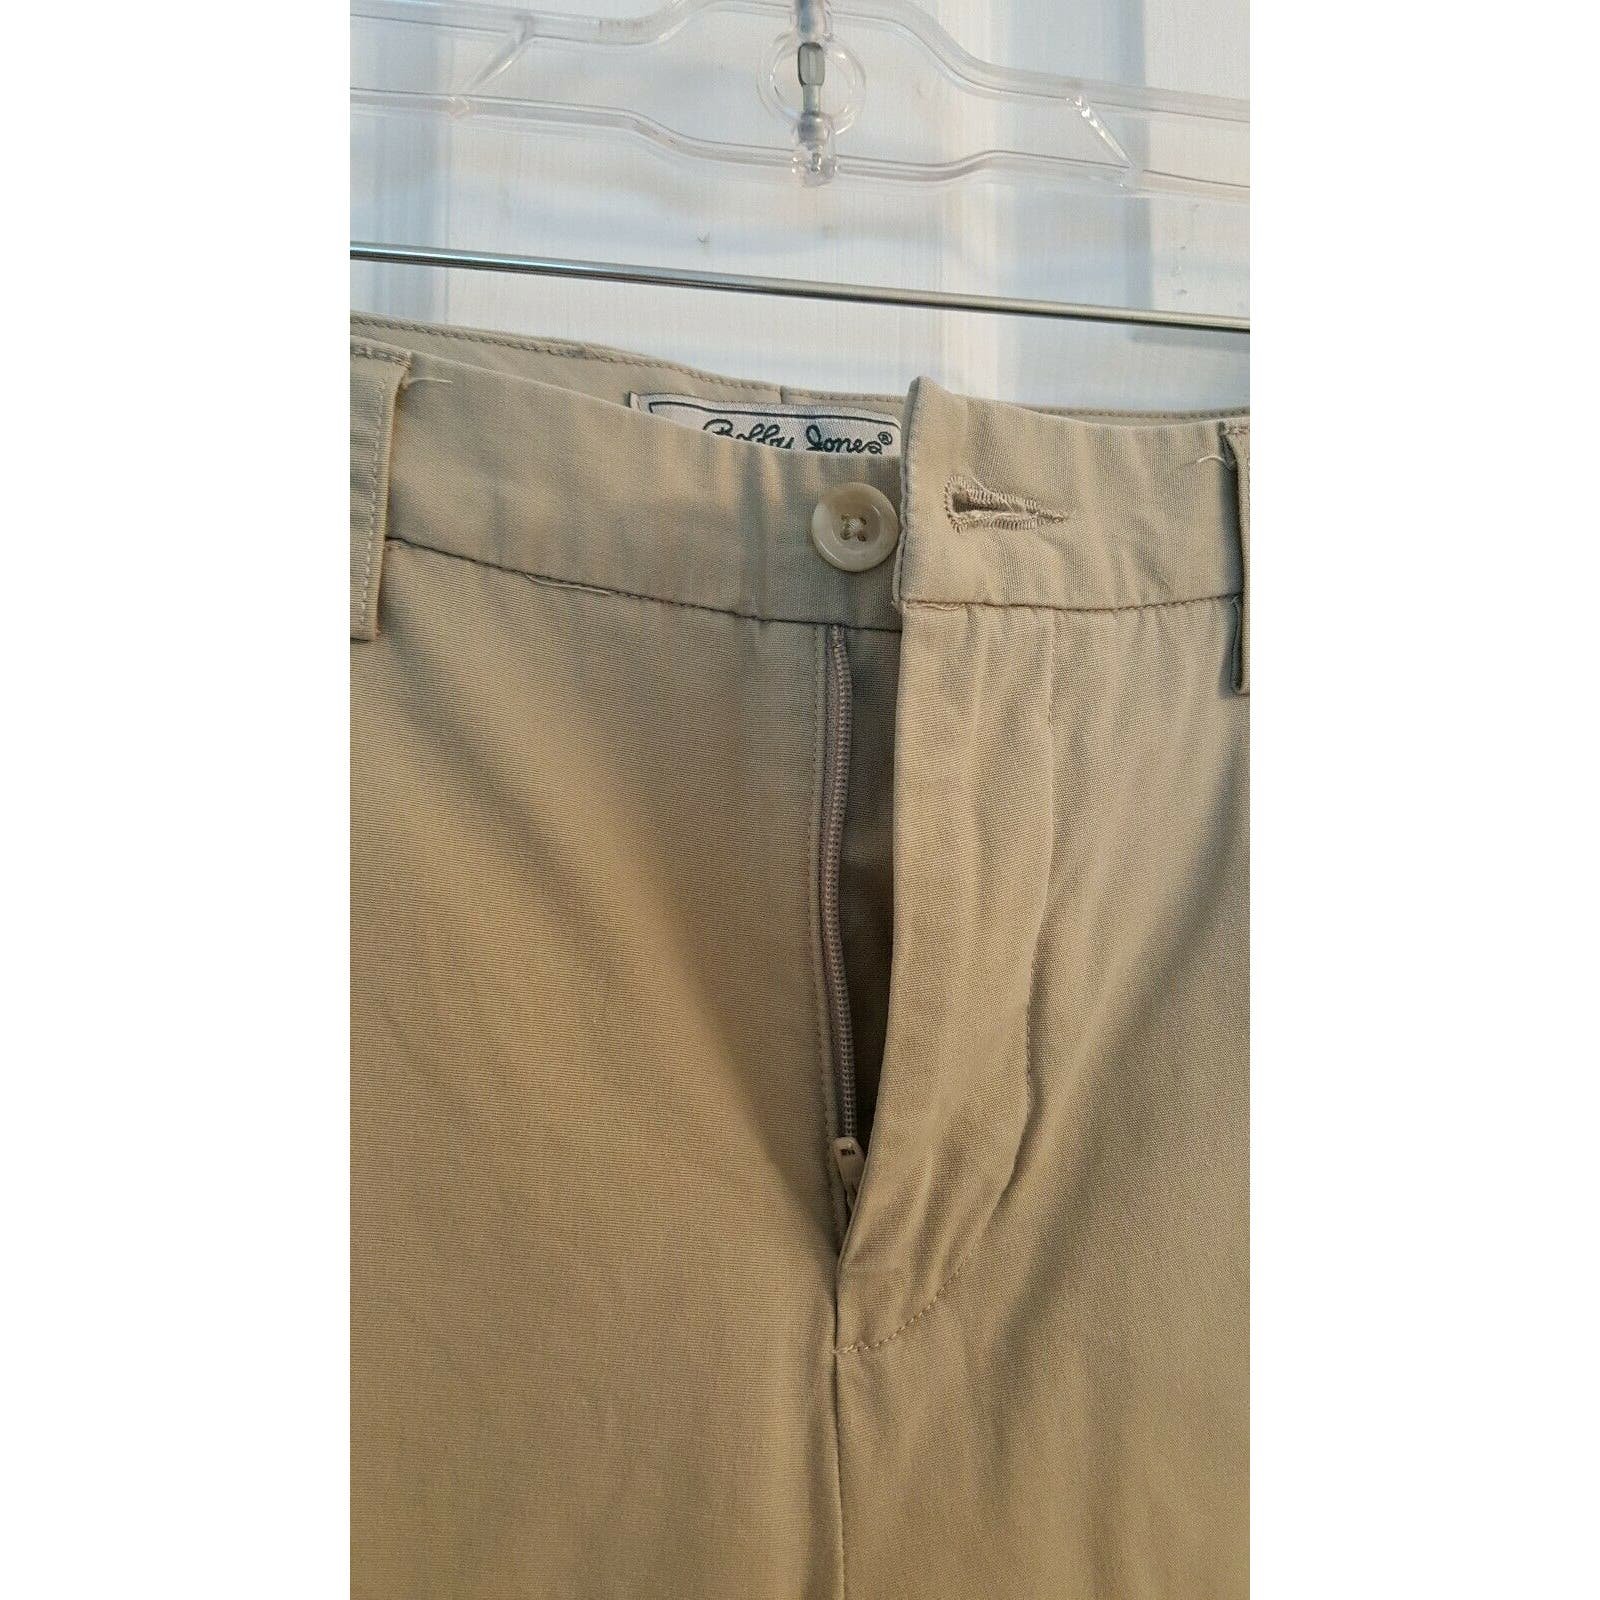 Authentic Bobby Jones Women´s Khakis Size: 4 gfljsYDWT online store